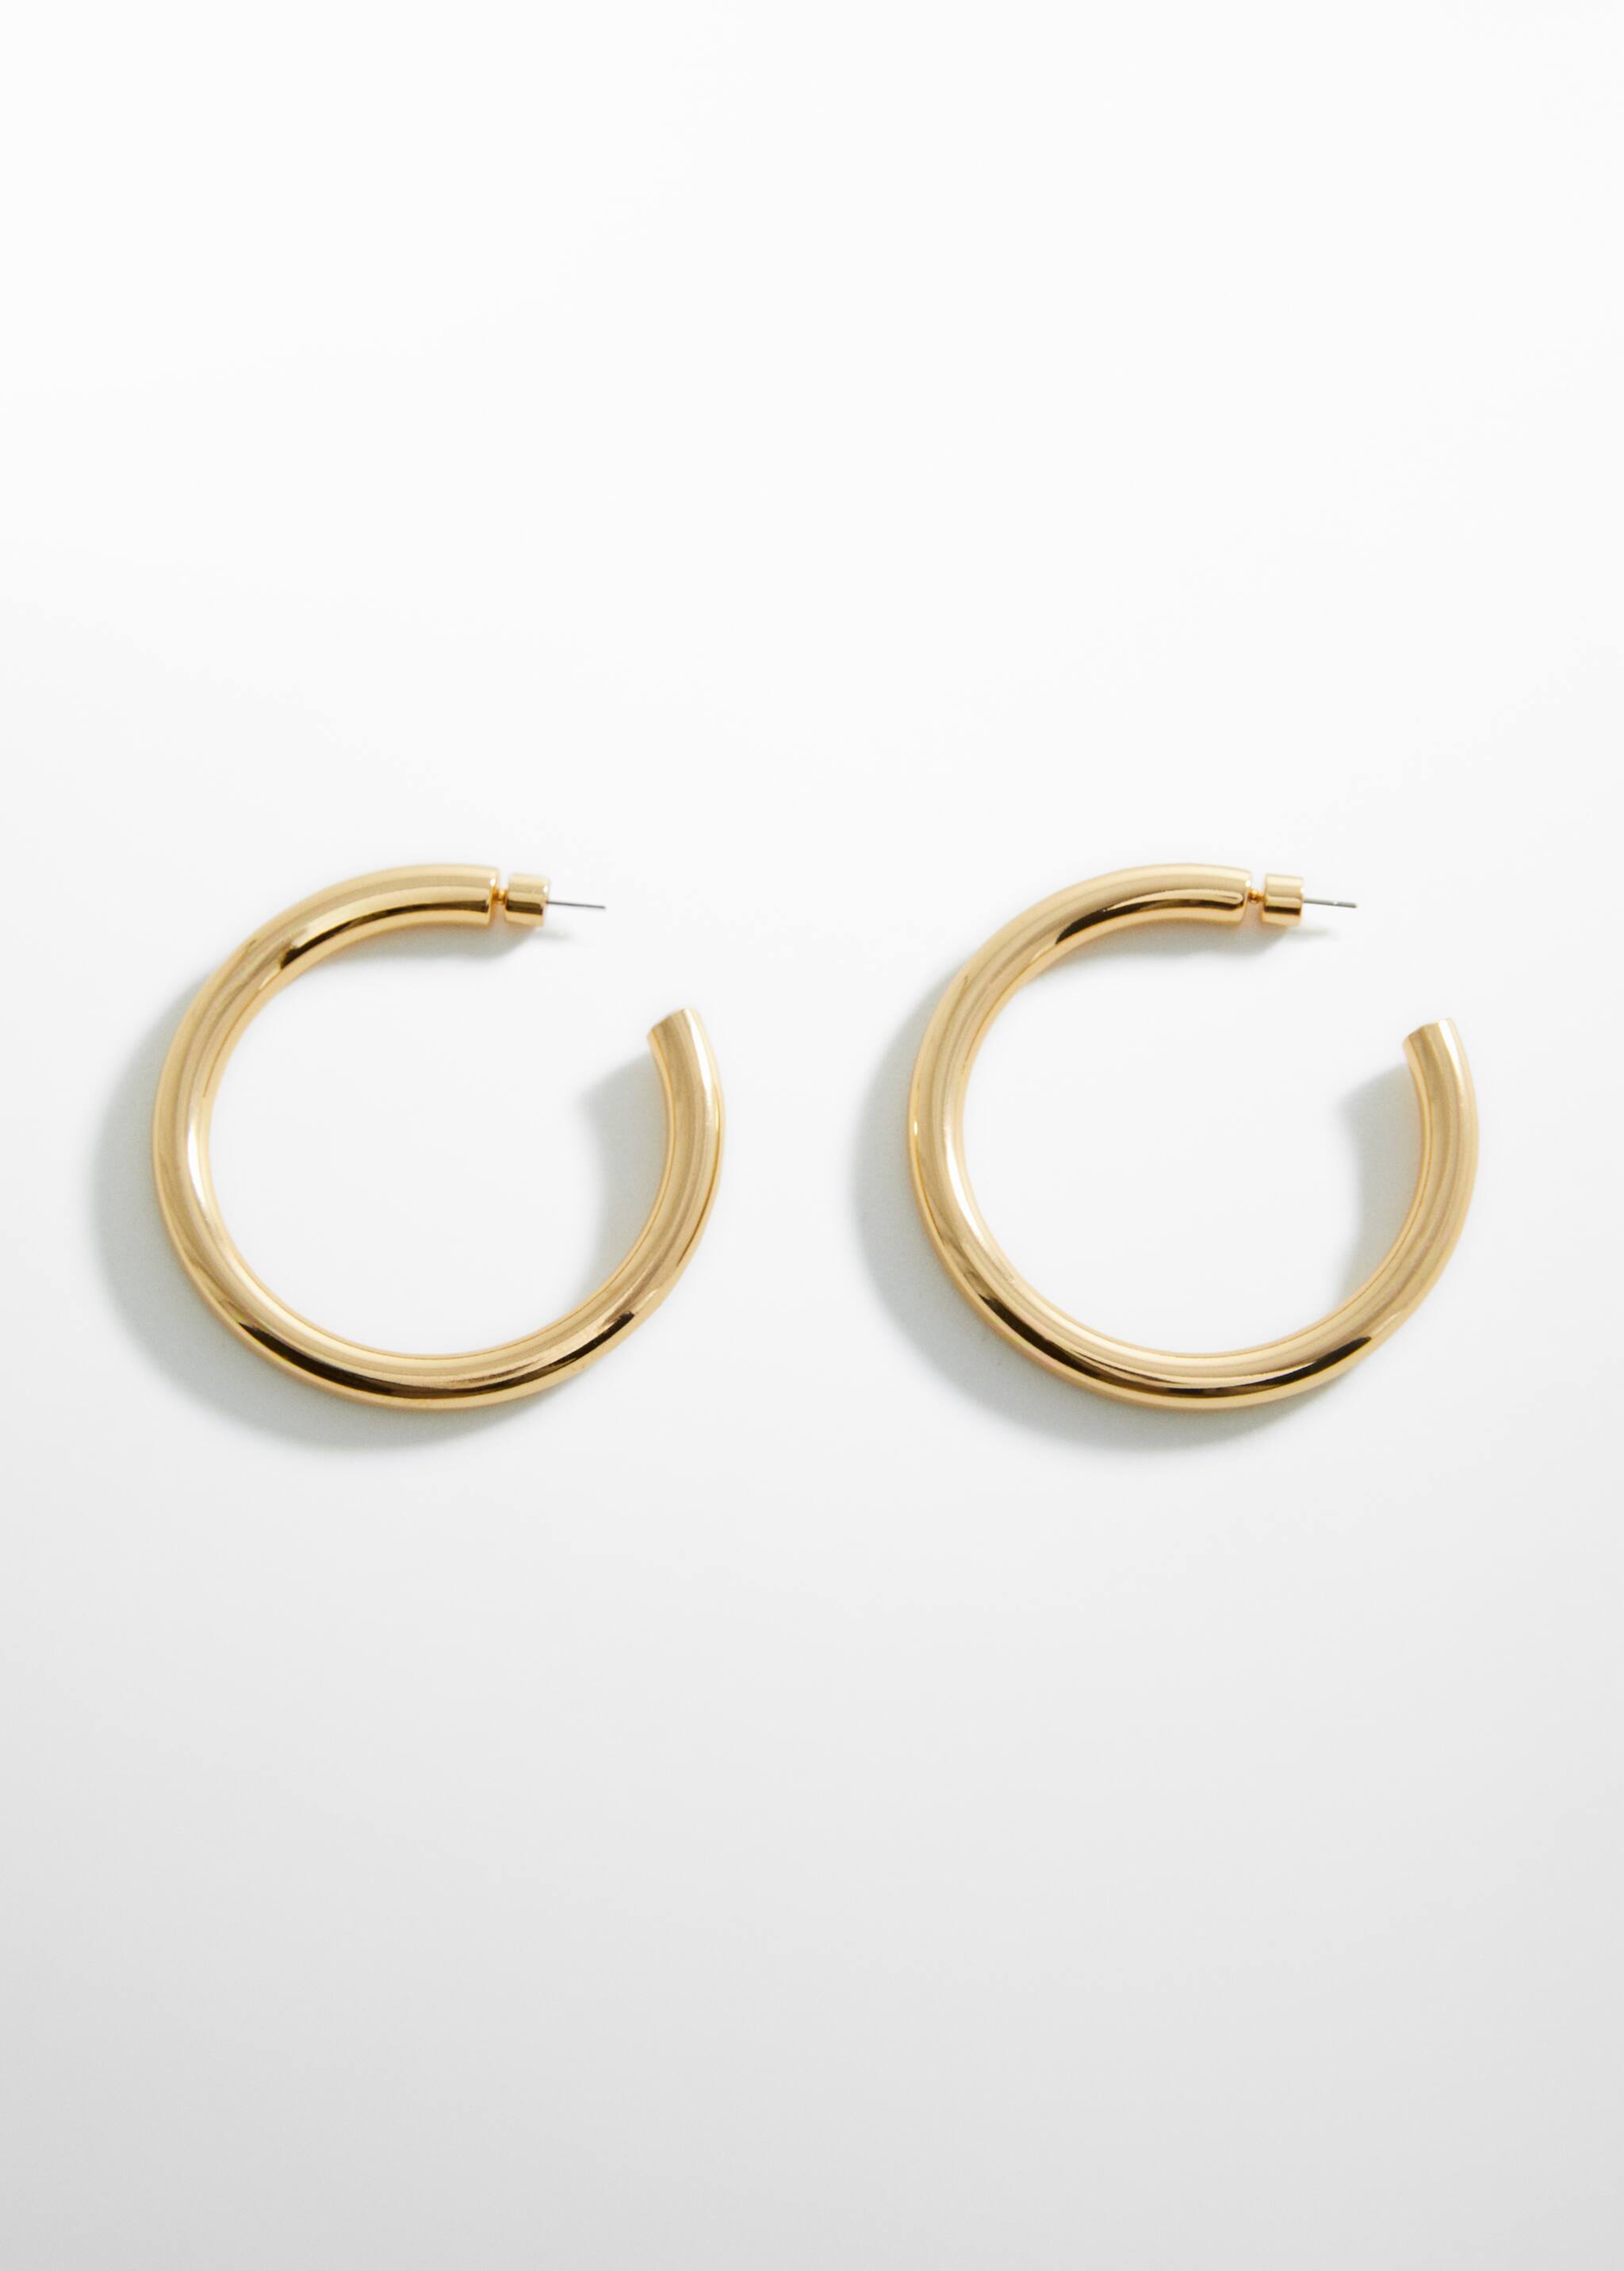 Hoop earrings - Article without model